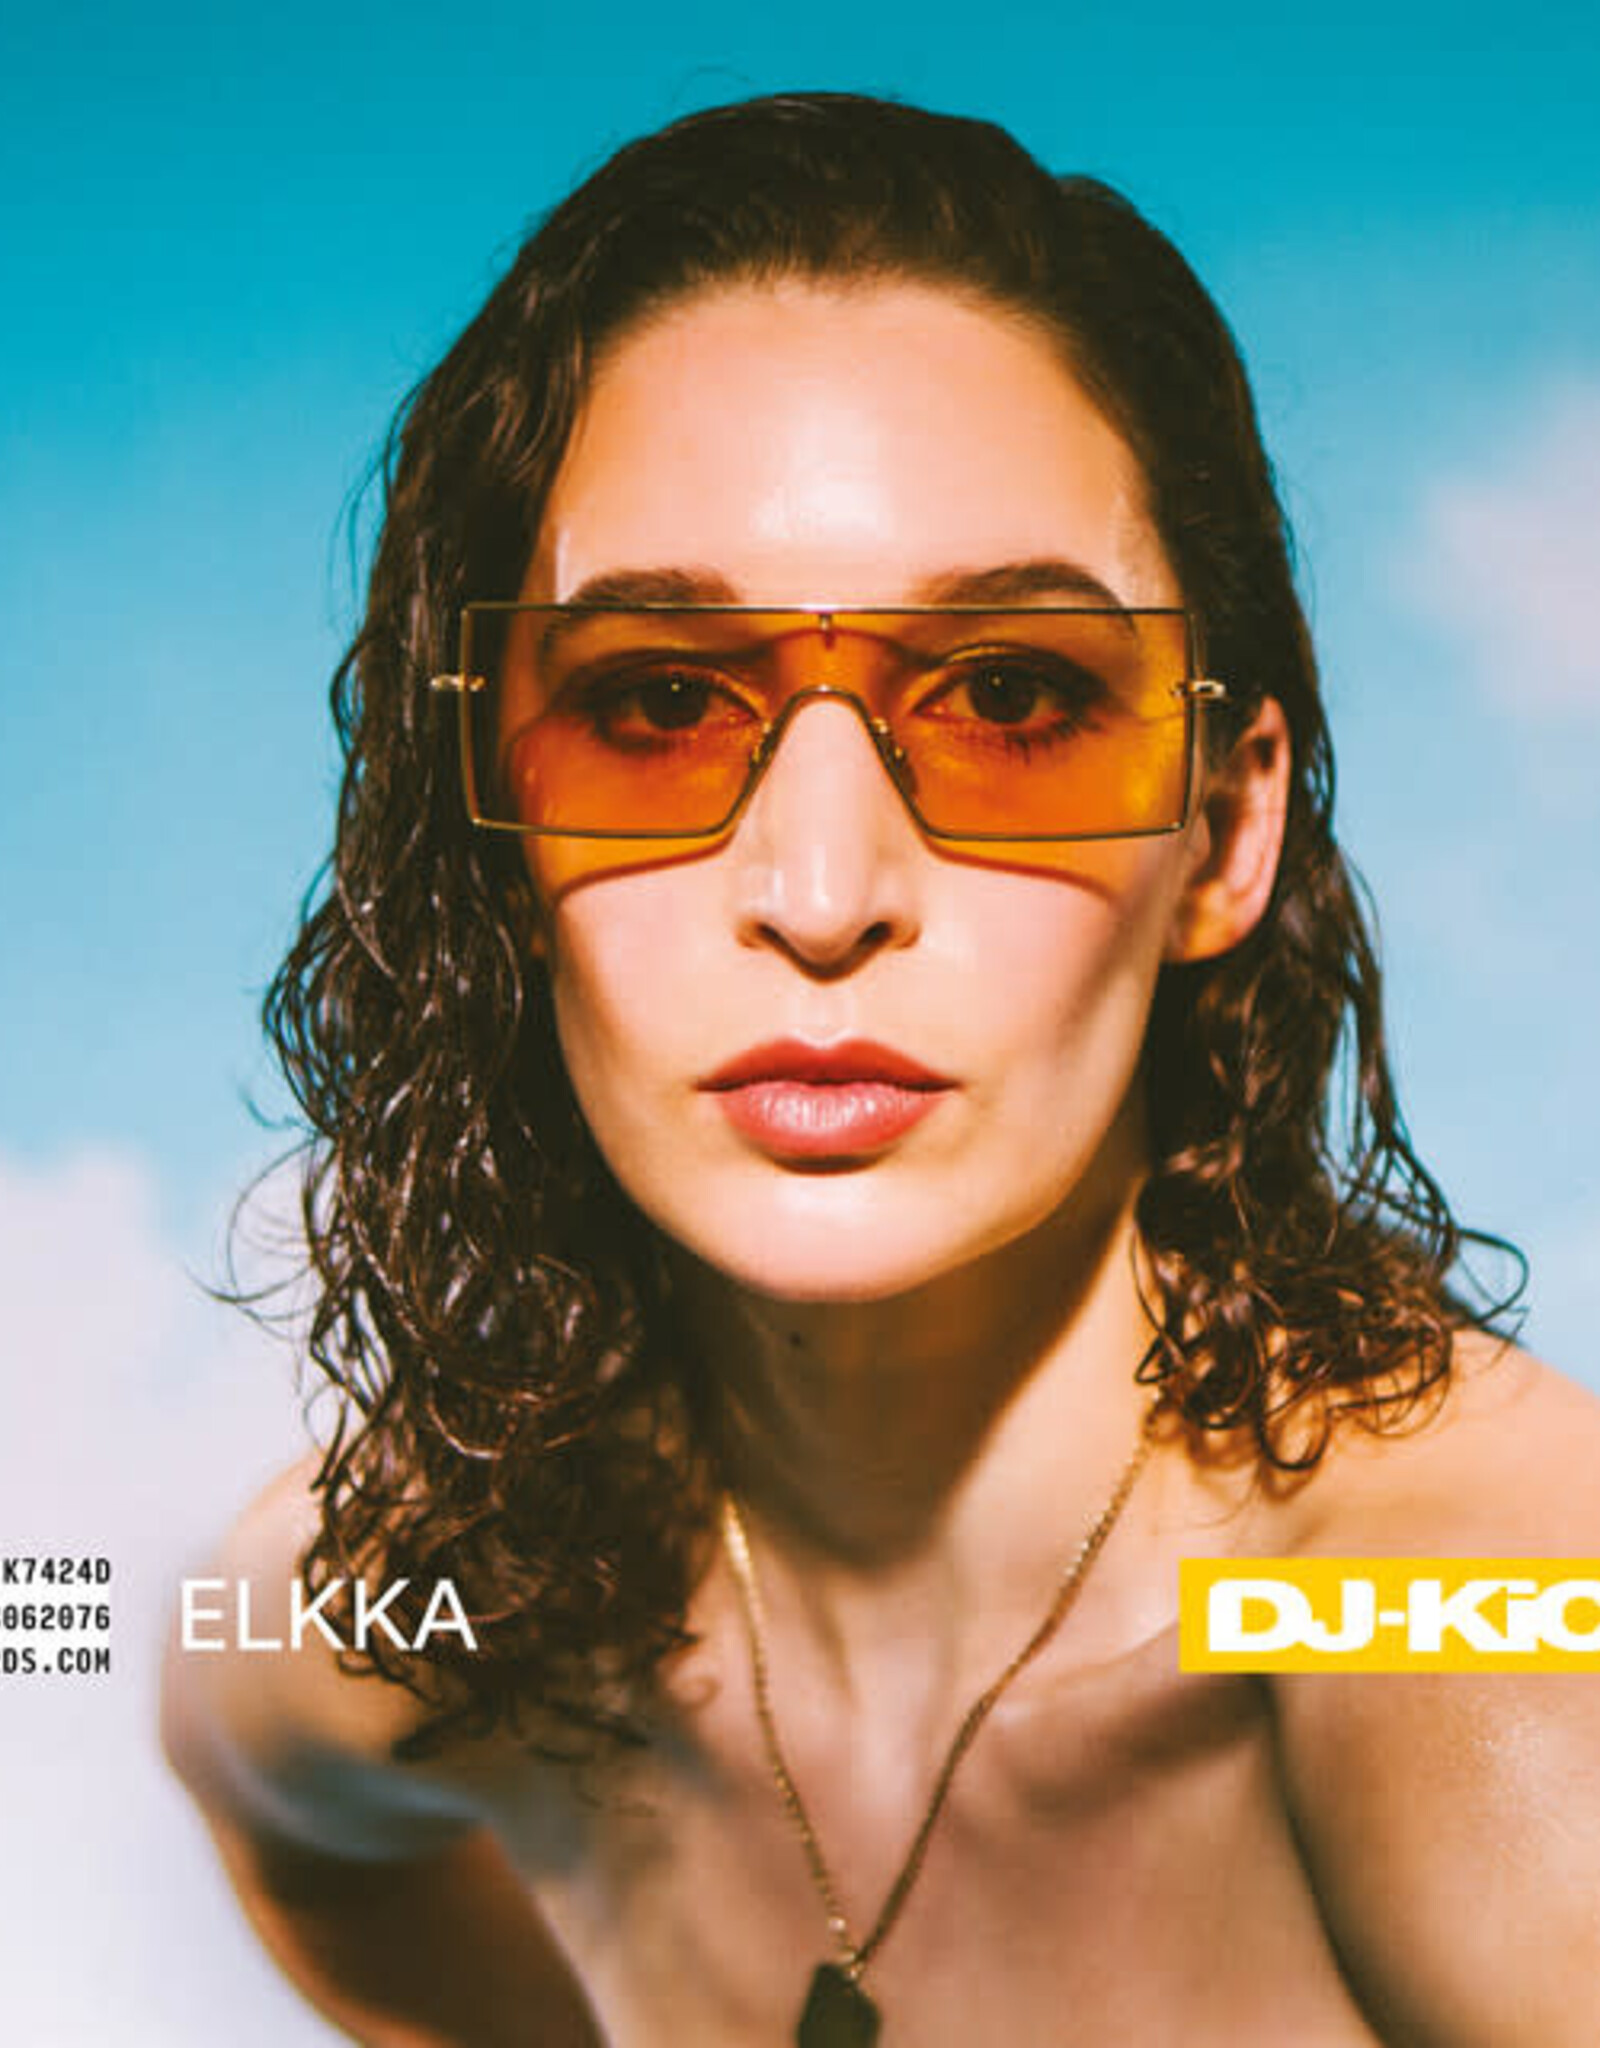 Elkka - DJ-Kicks: Elkka